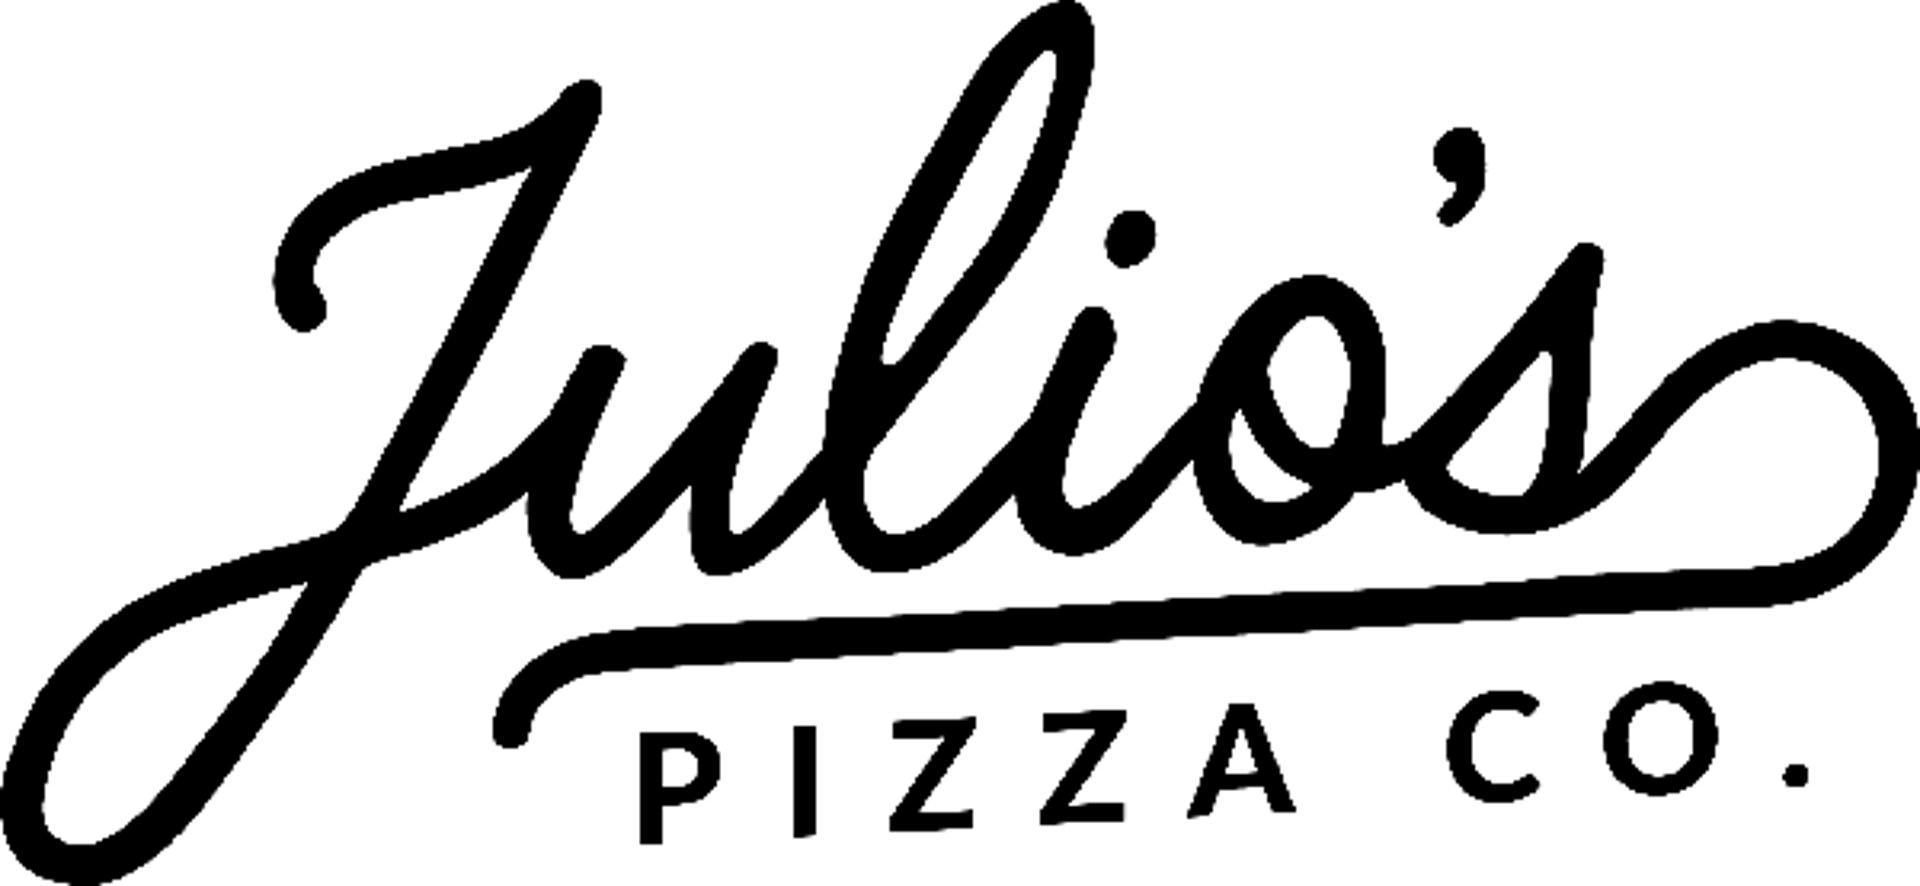 Julios Pizza Co